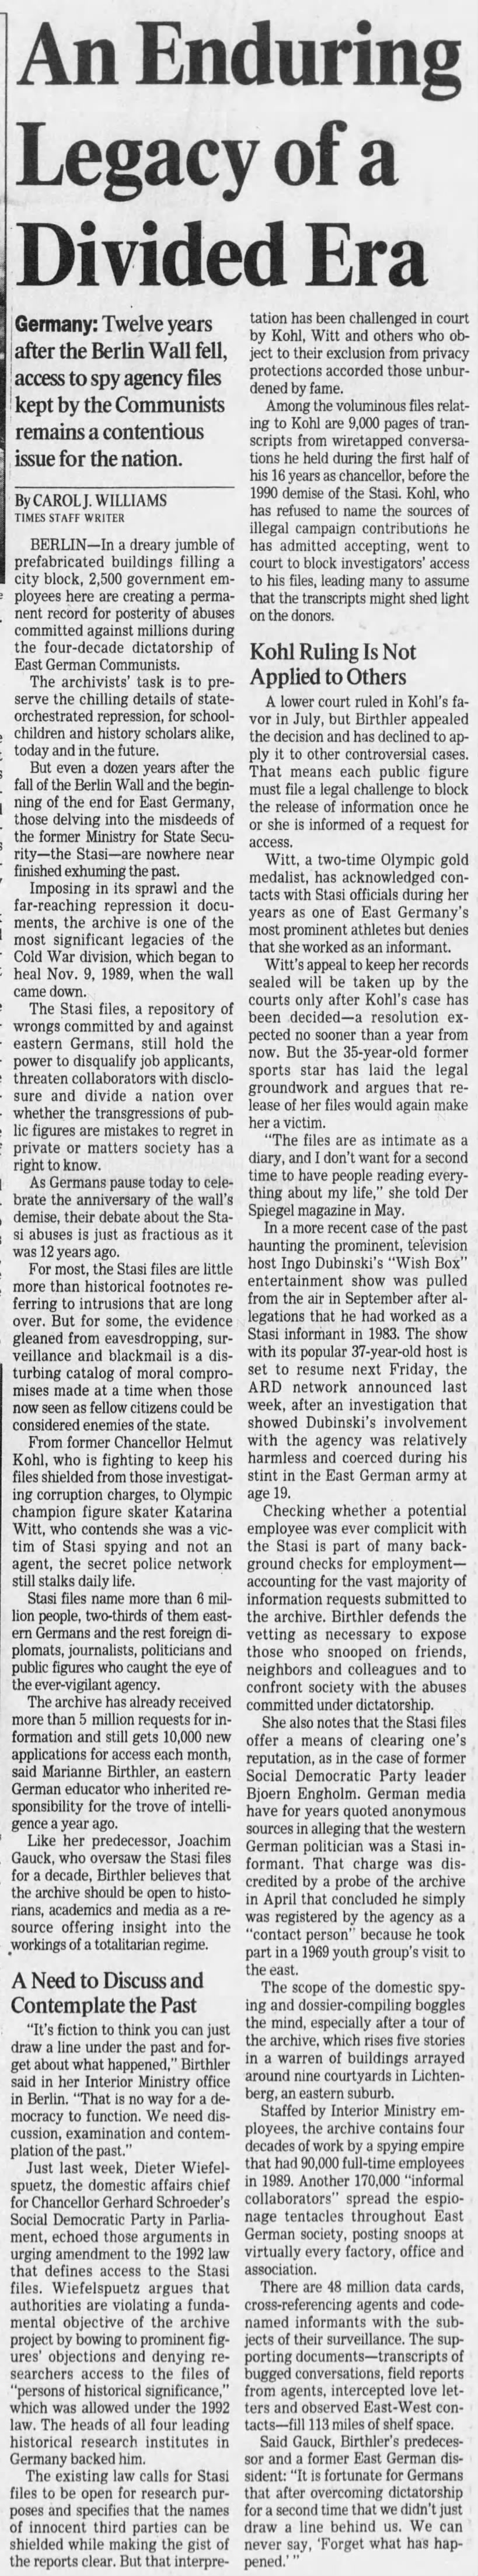 An Enduring Legacy of a Divided Era (Stasi files) (2001)